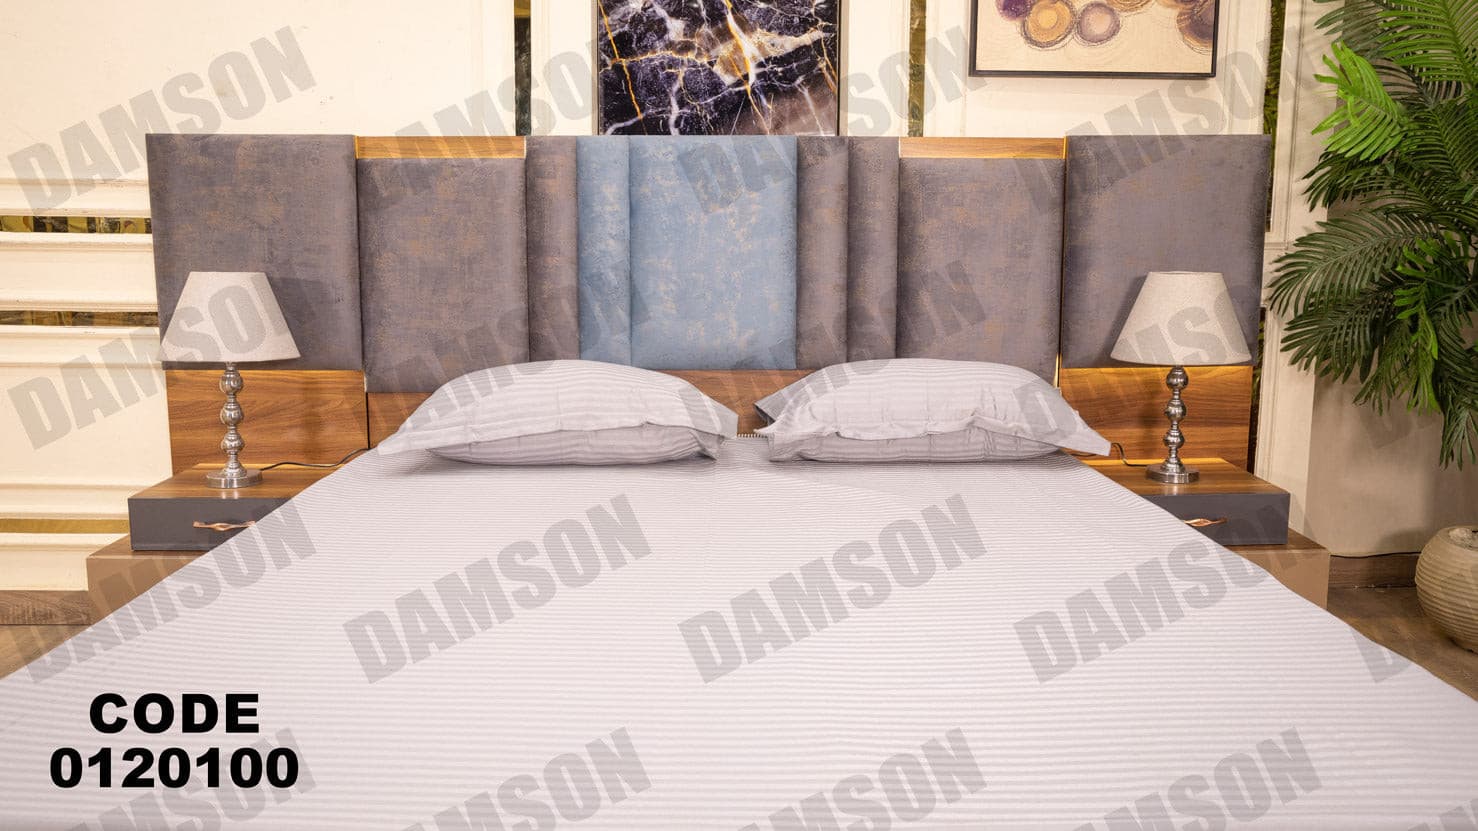 غرفة نوم ماستر 201 - Damson Furnitureغرفة نوم ماستر 201